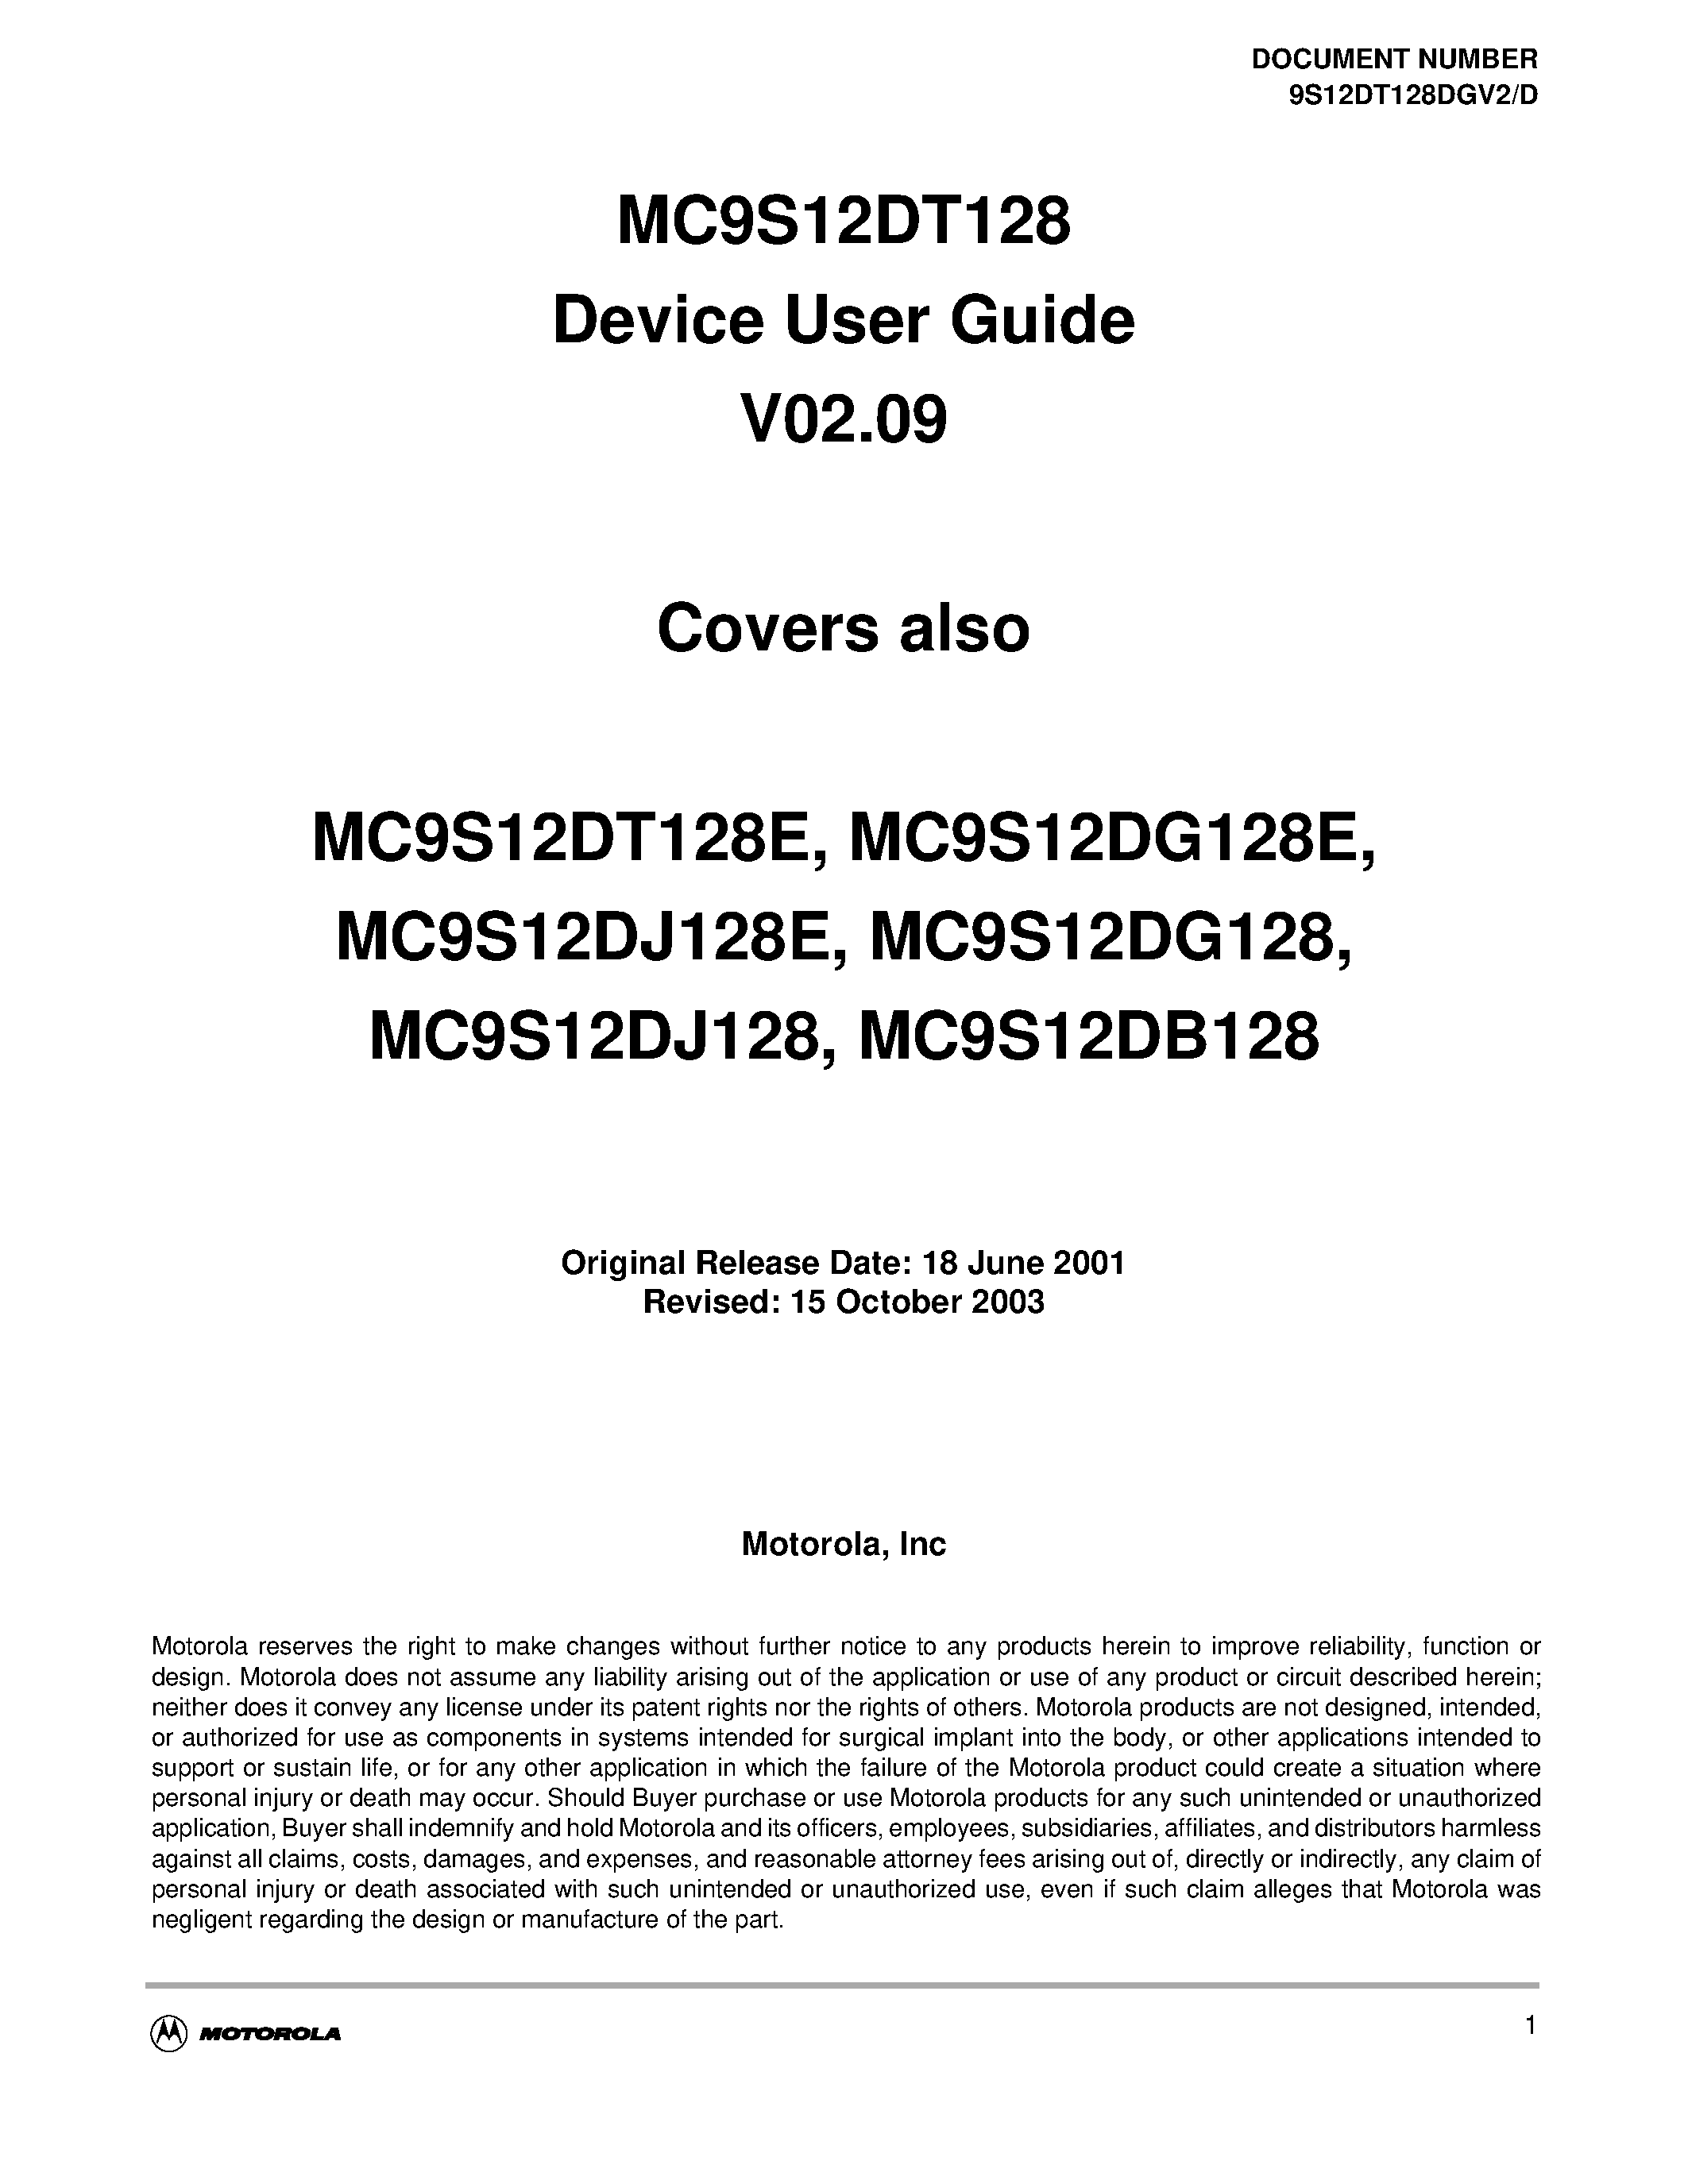 Даташит S12INTV1 - MC9S12DT128 Device User Guide V02.09 страница 1